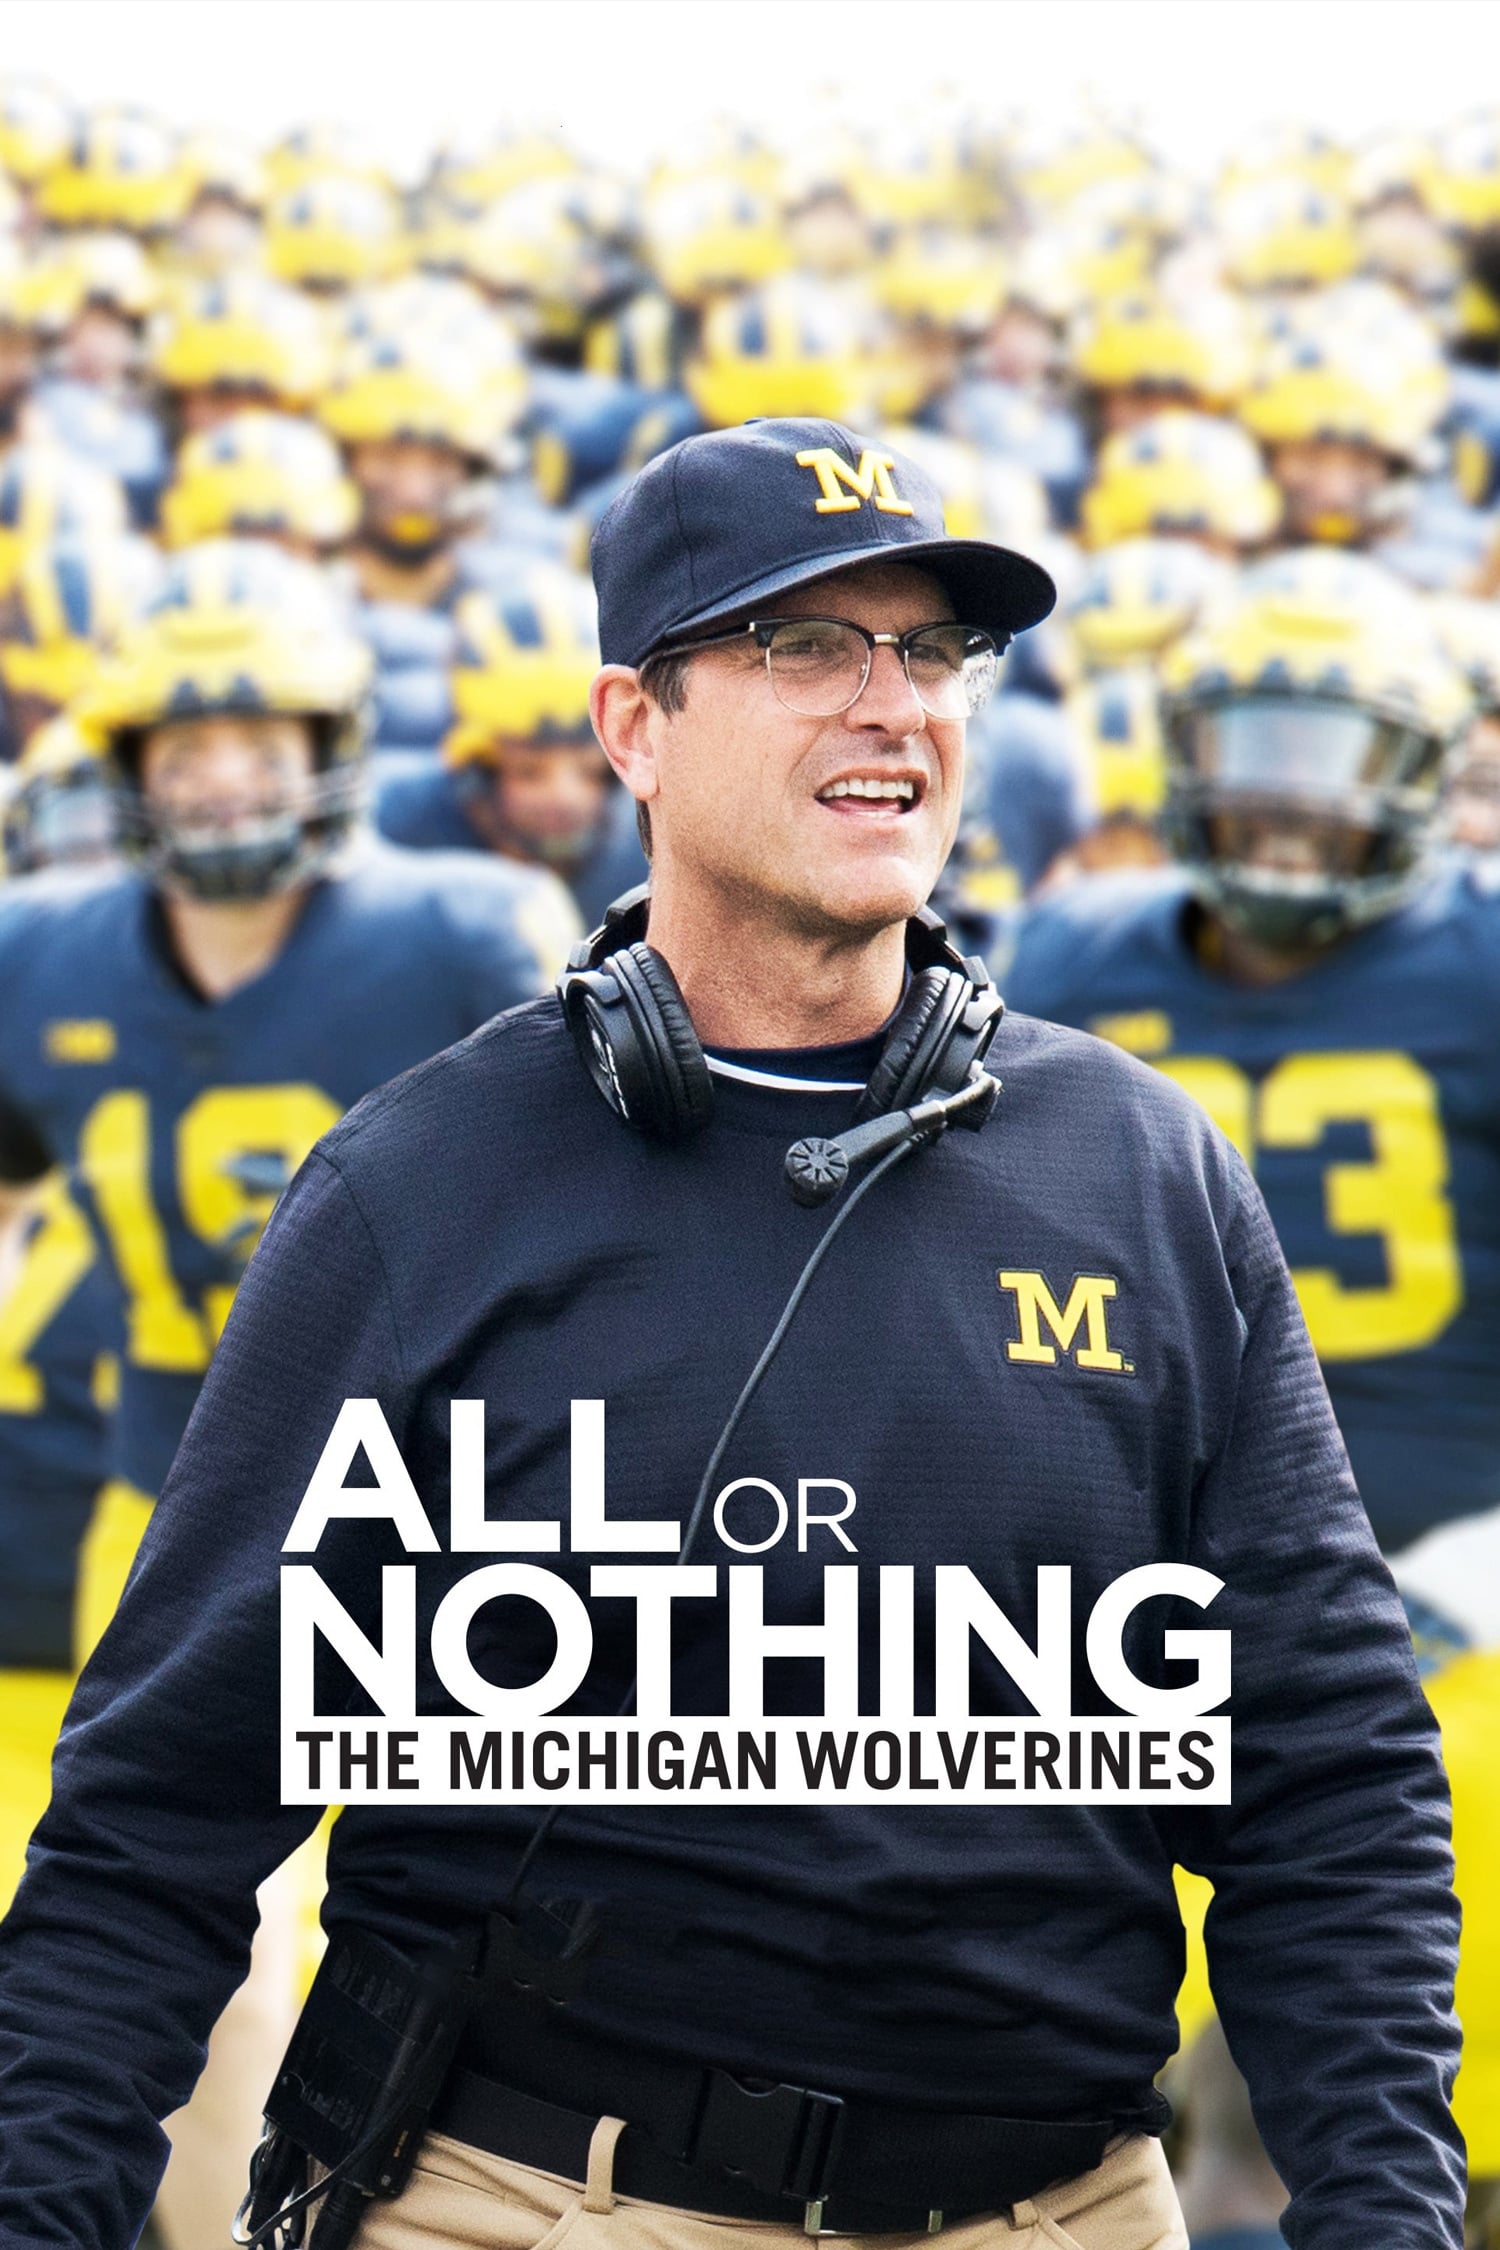 Caratula de All or Nothing: The Michigan Wolverines (All or Nothing: The Michigan Wolverines) 